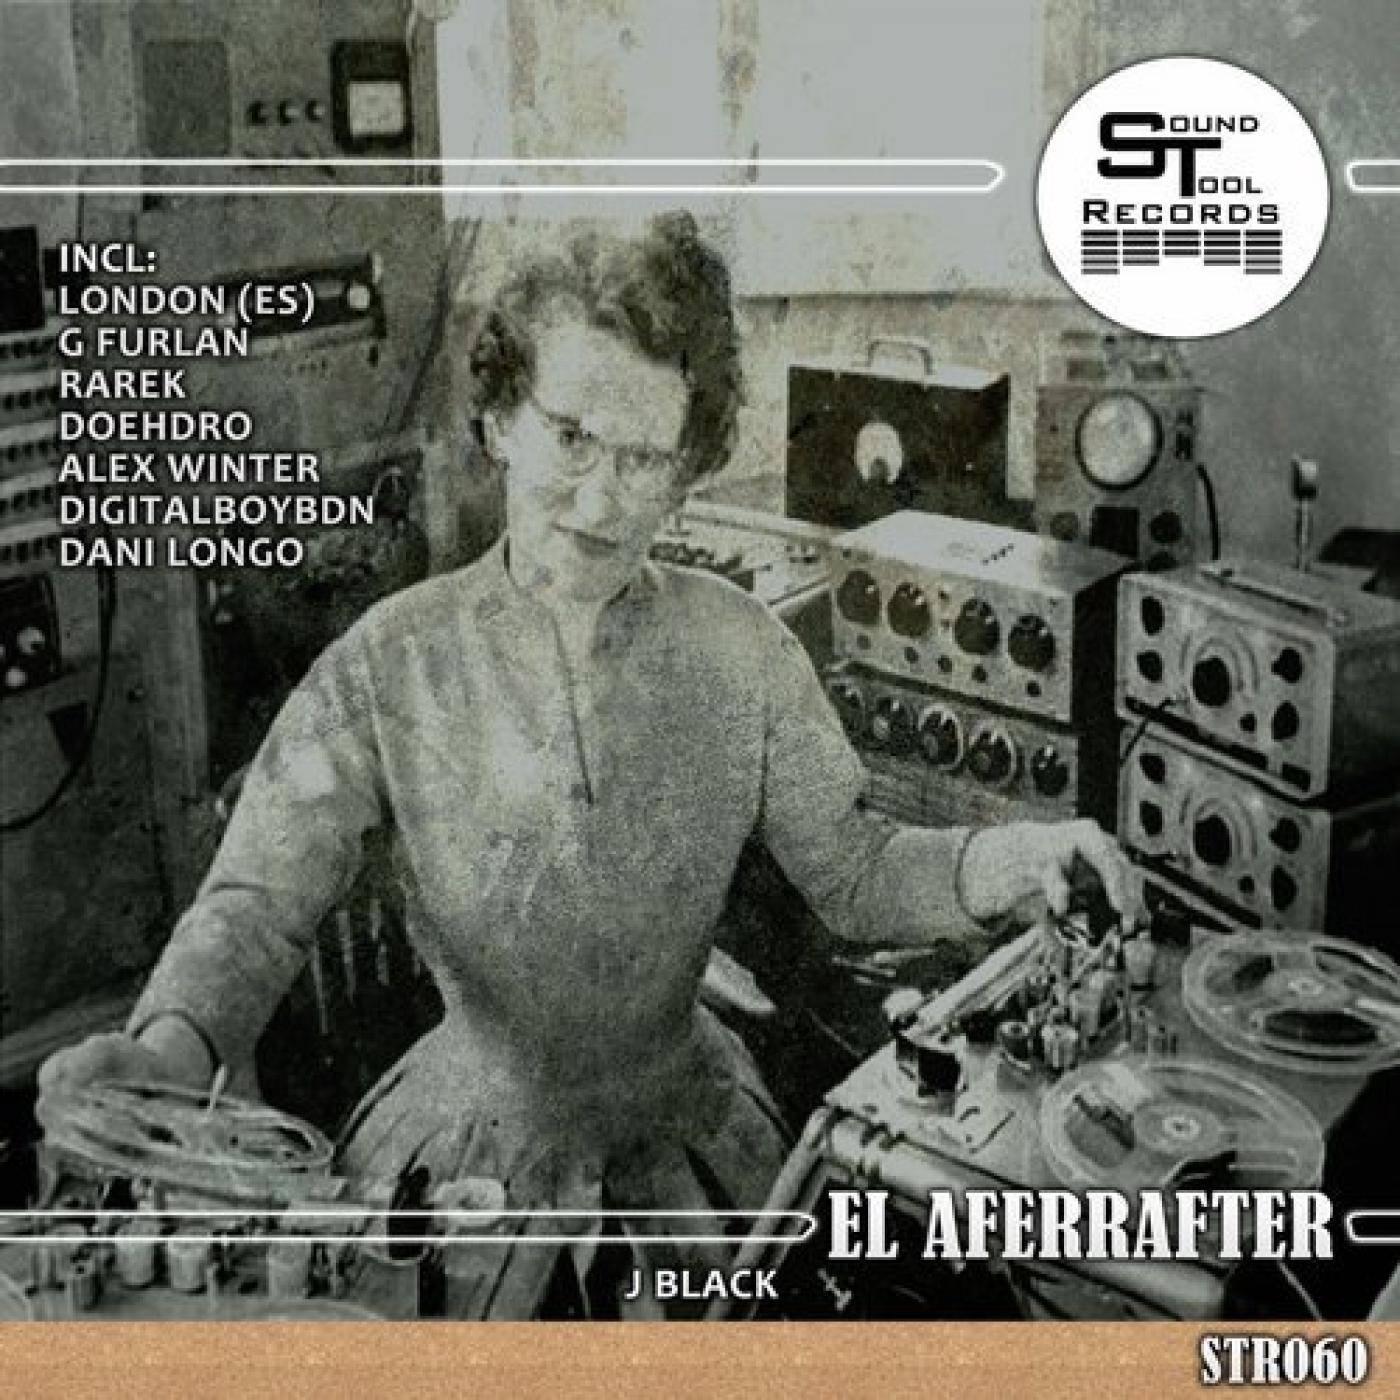 El Aferrafter (Dani Longo Remix)